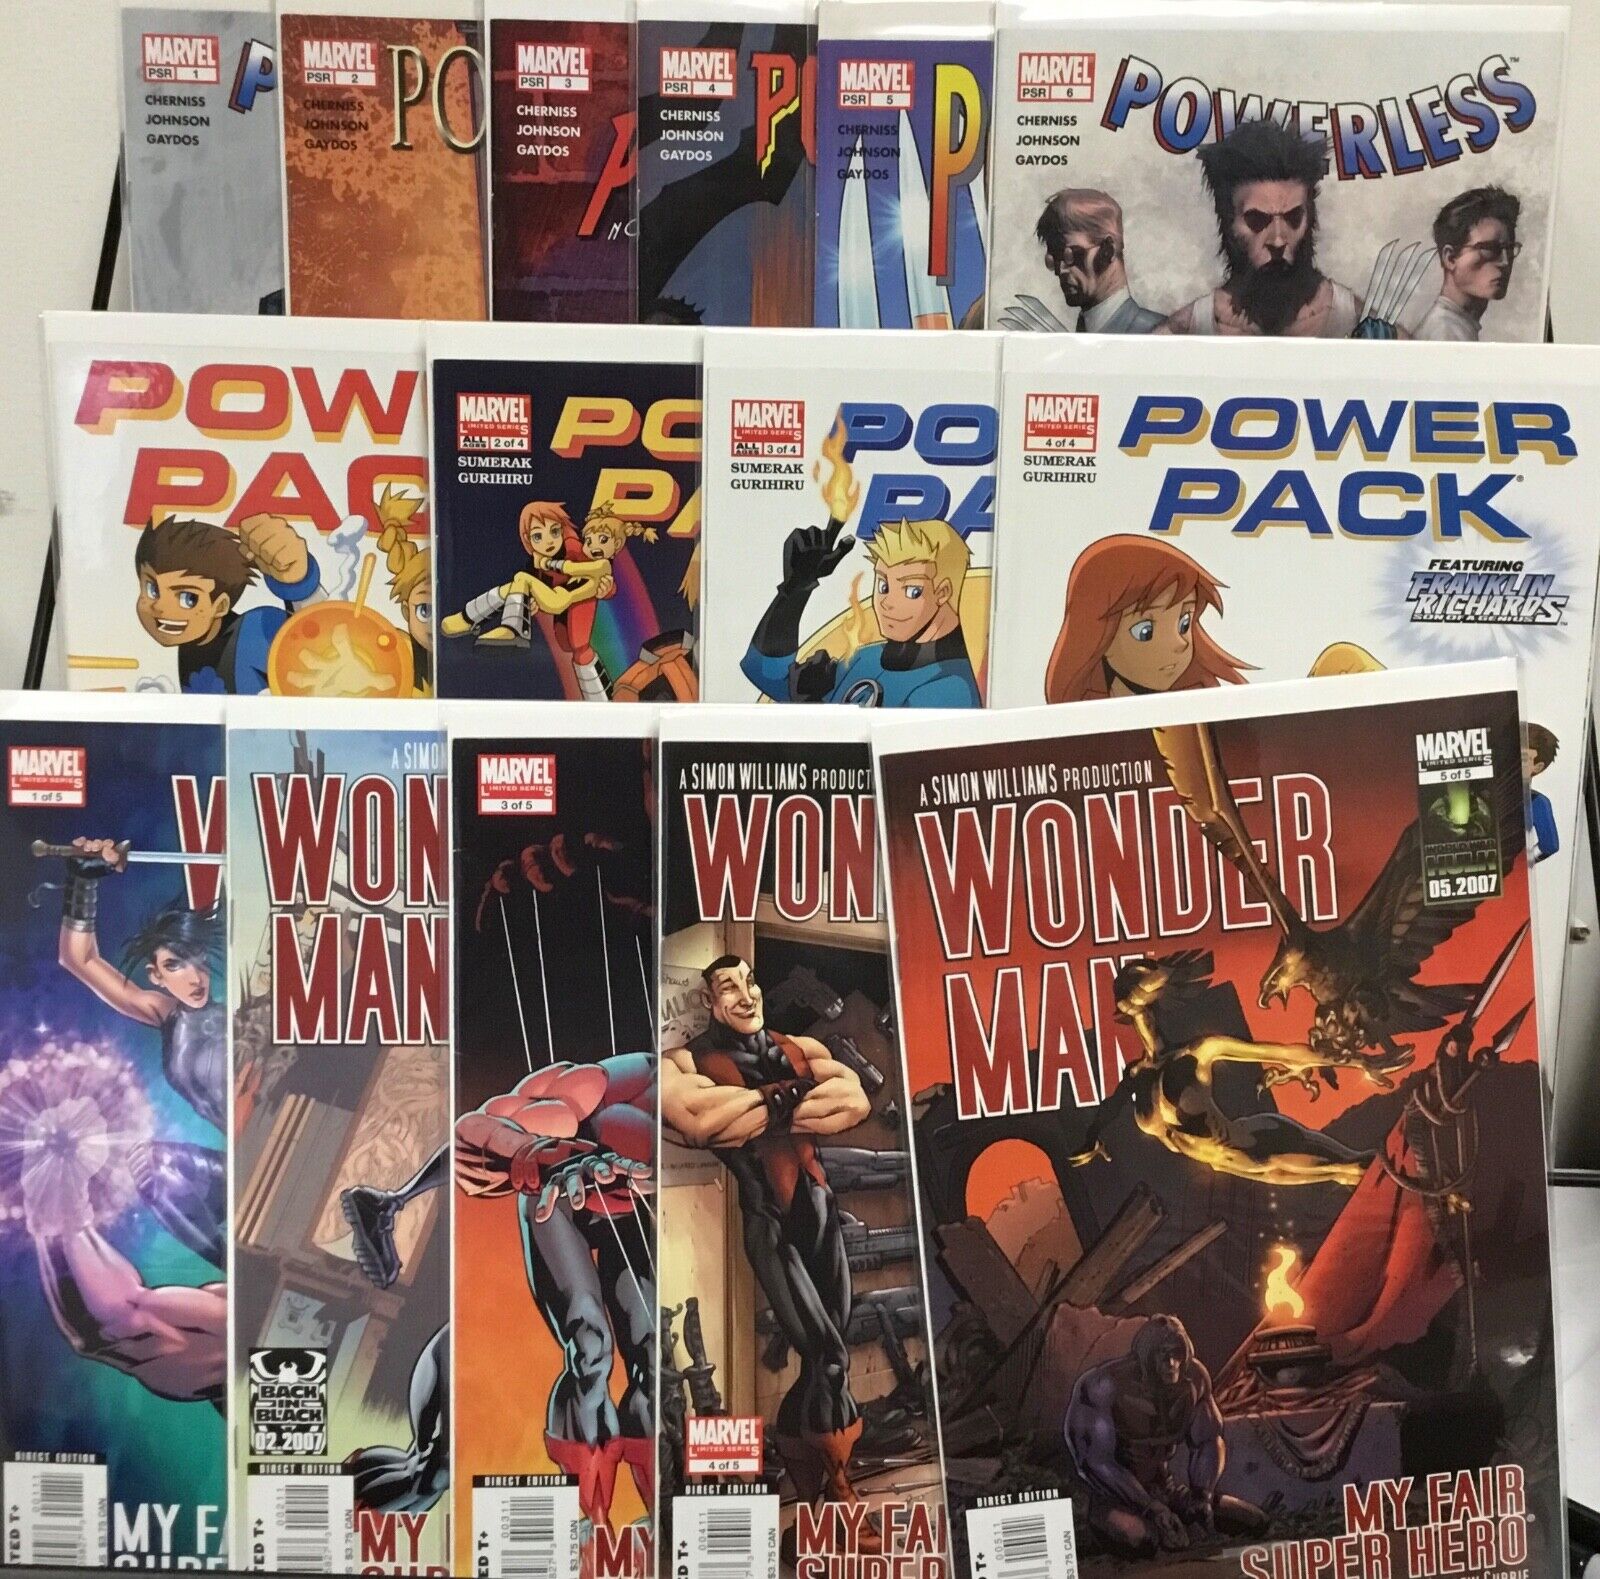 Marvel Comics Powerless 1-6, Power Pack 1-4, Wonder Man 1-5